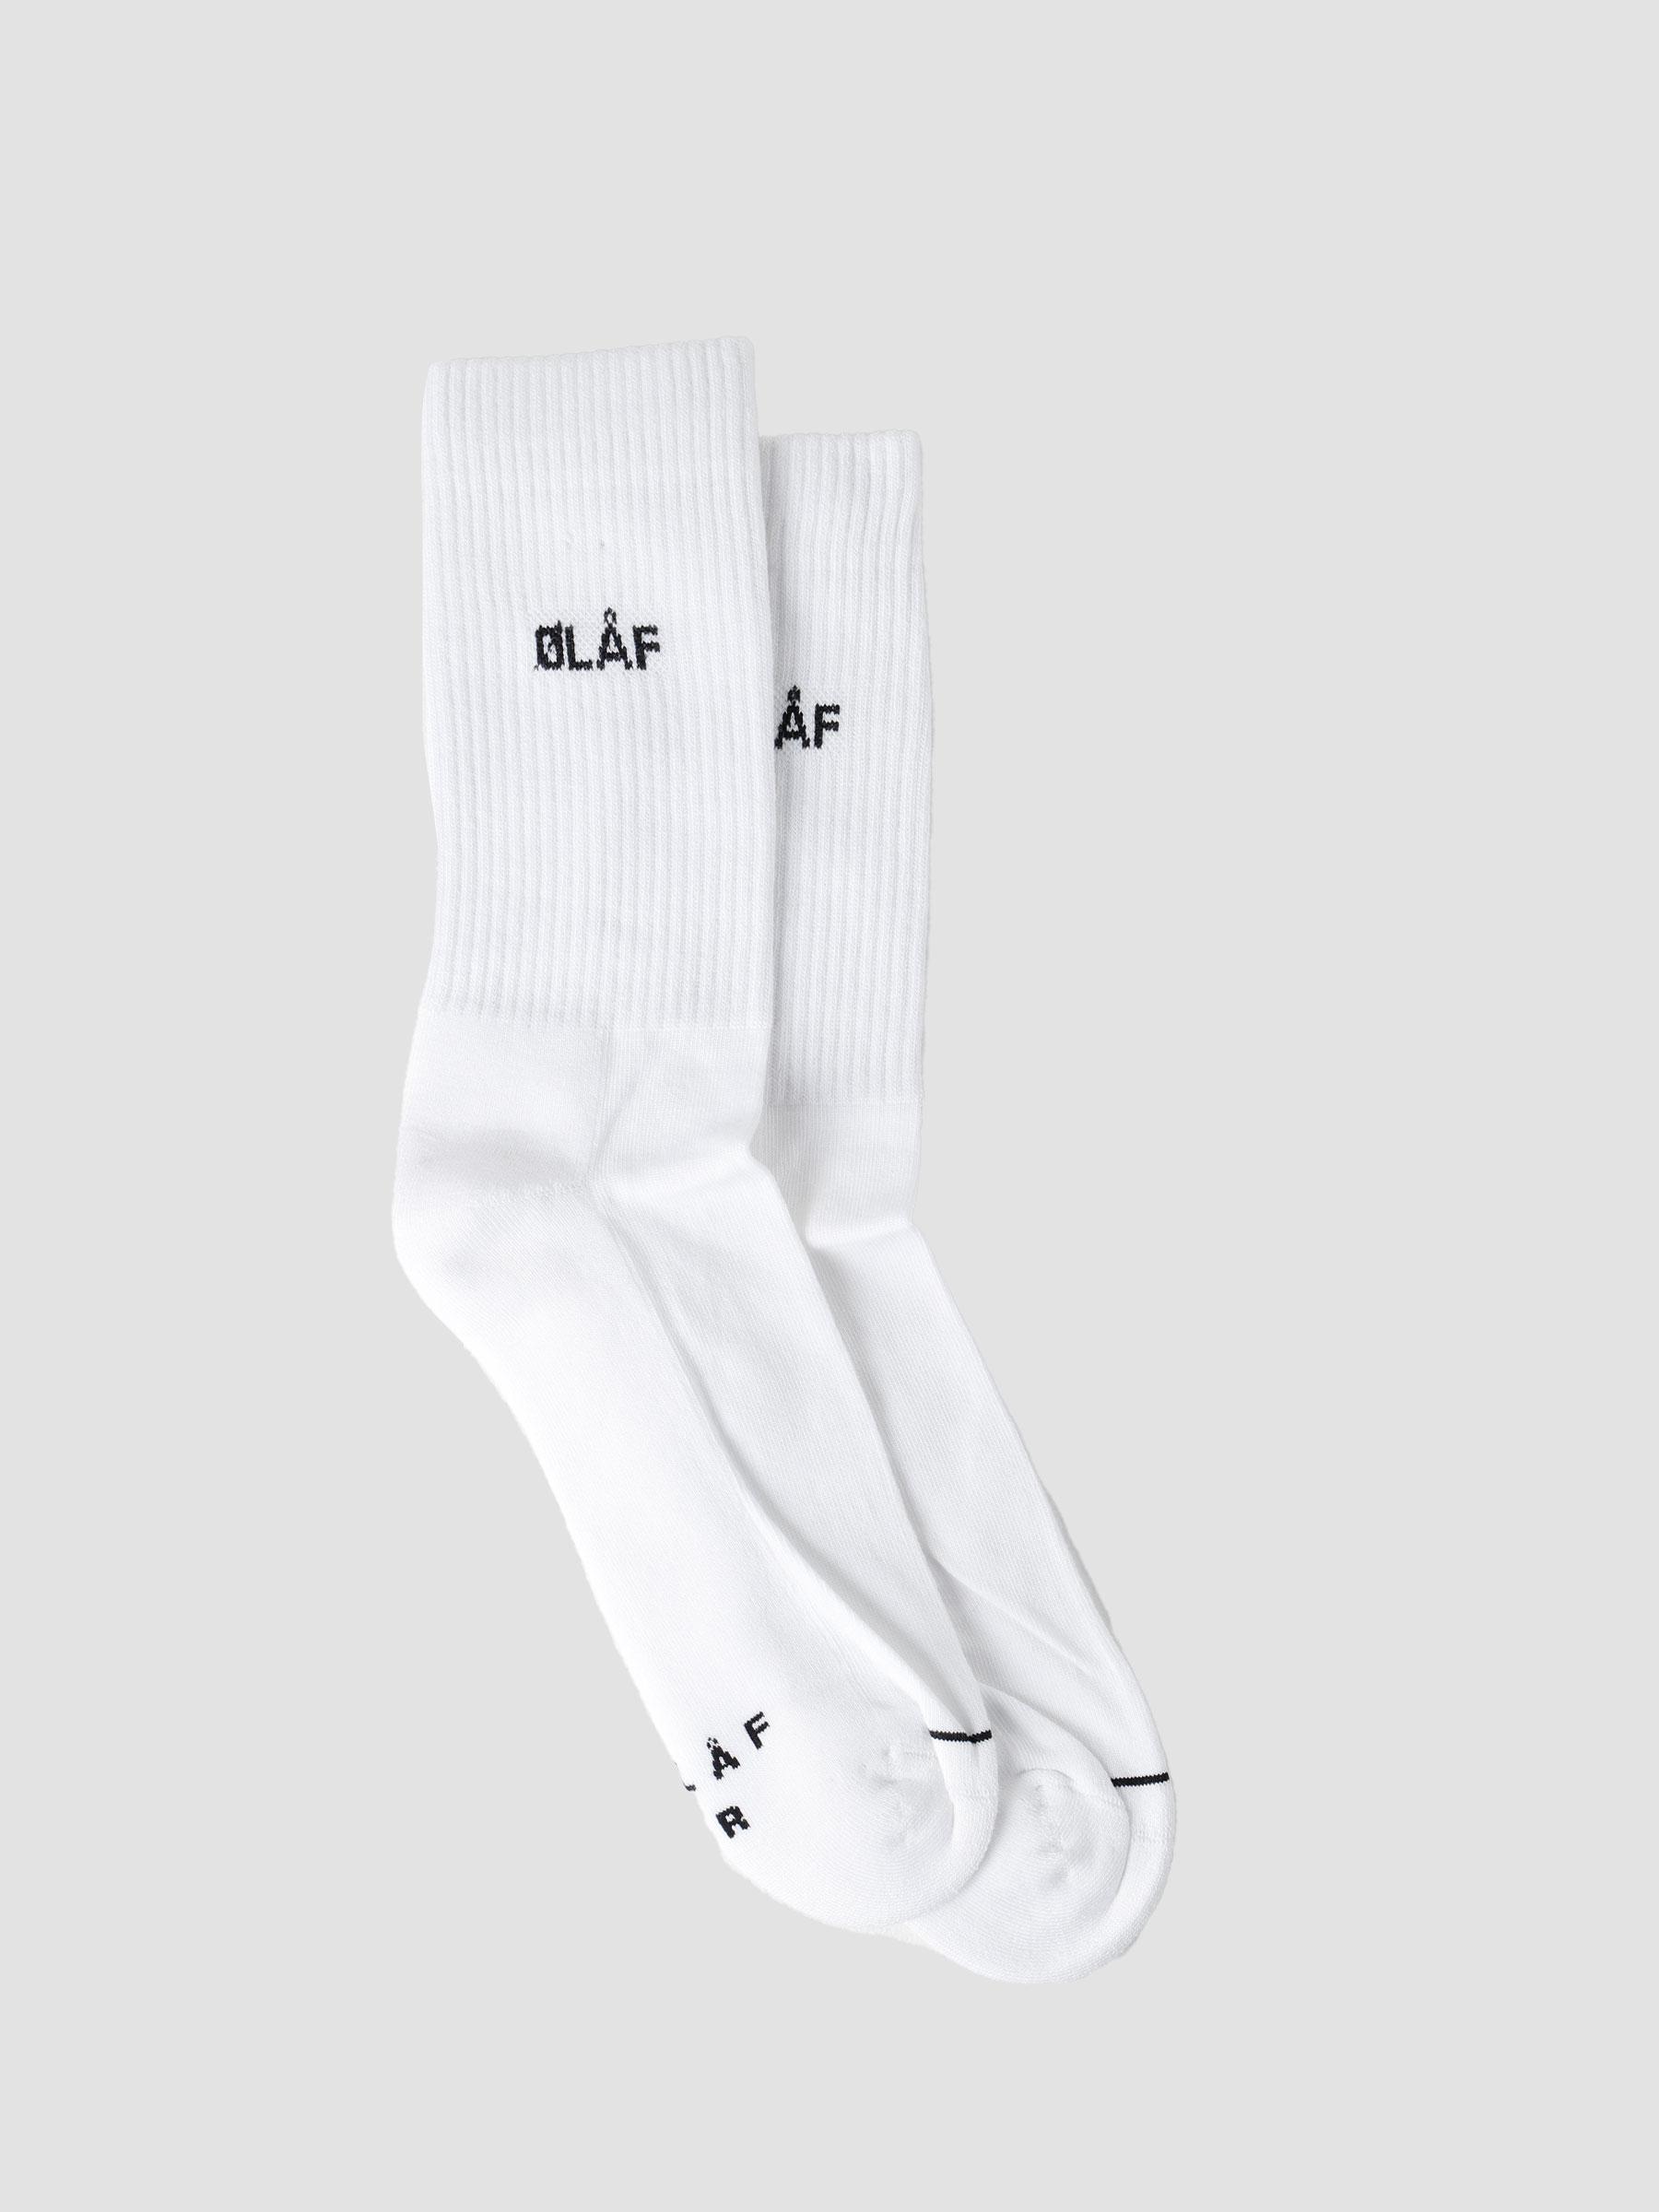 OLAF Mini Logo Socks White Black - Freshcotton